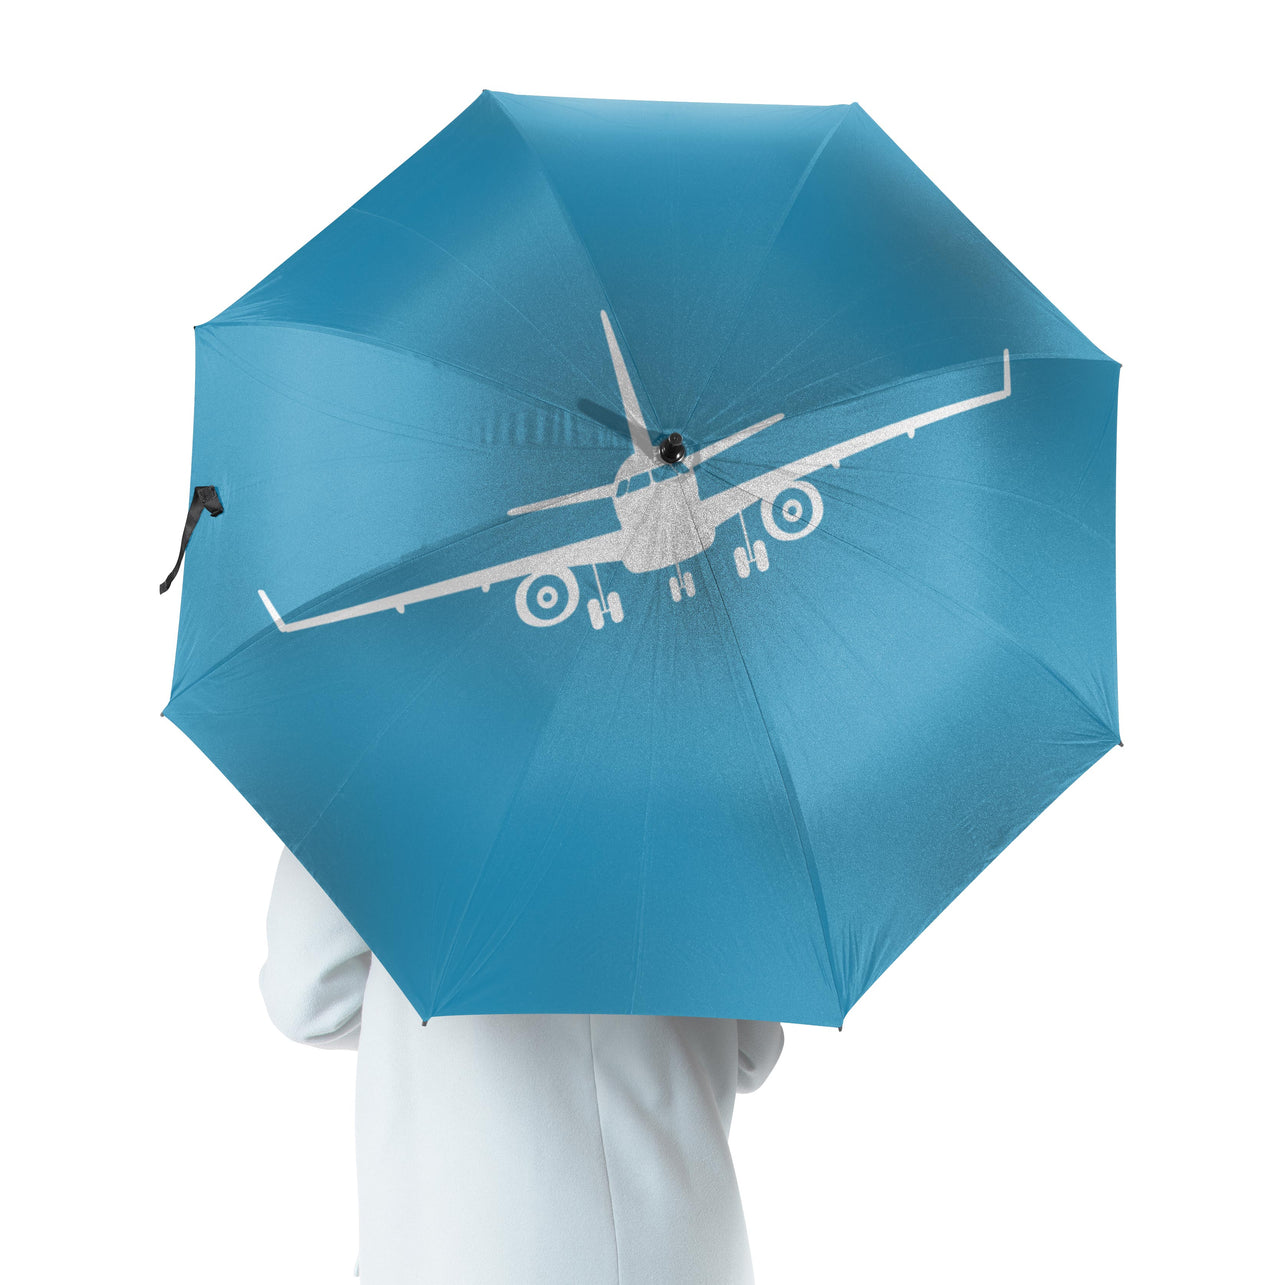 Embraer E-190 Silhouette Plane Designed Umbrella